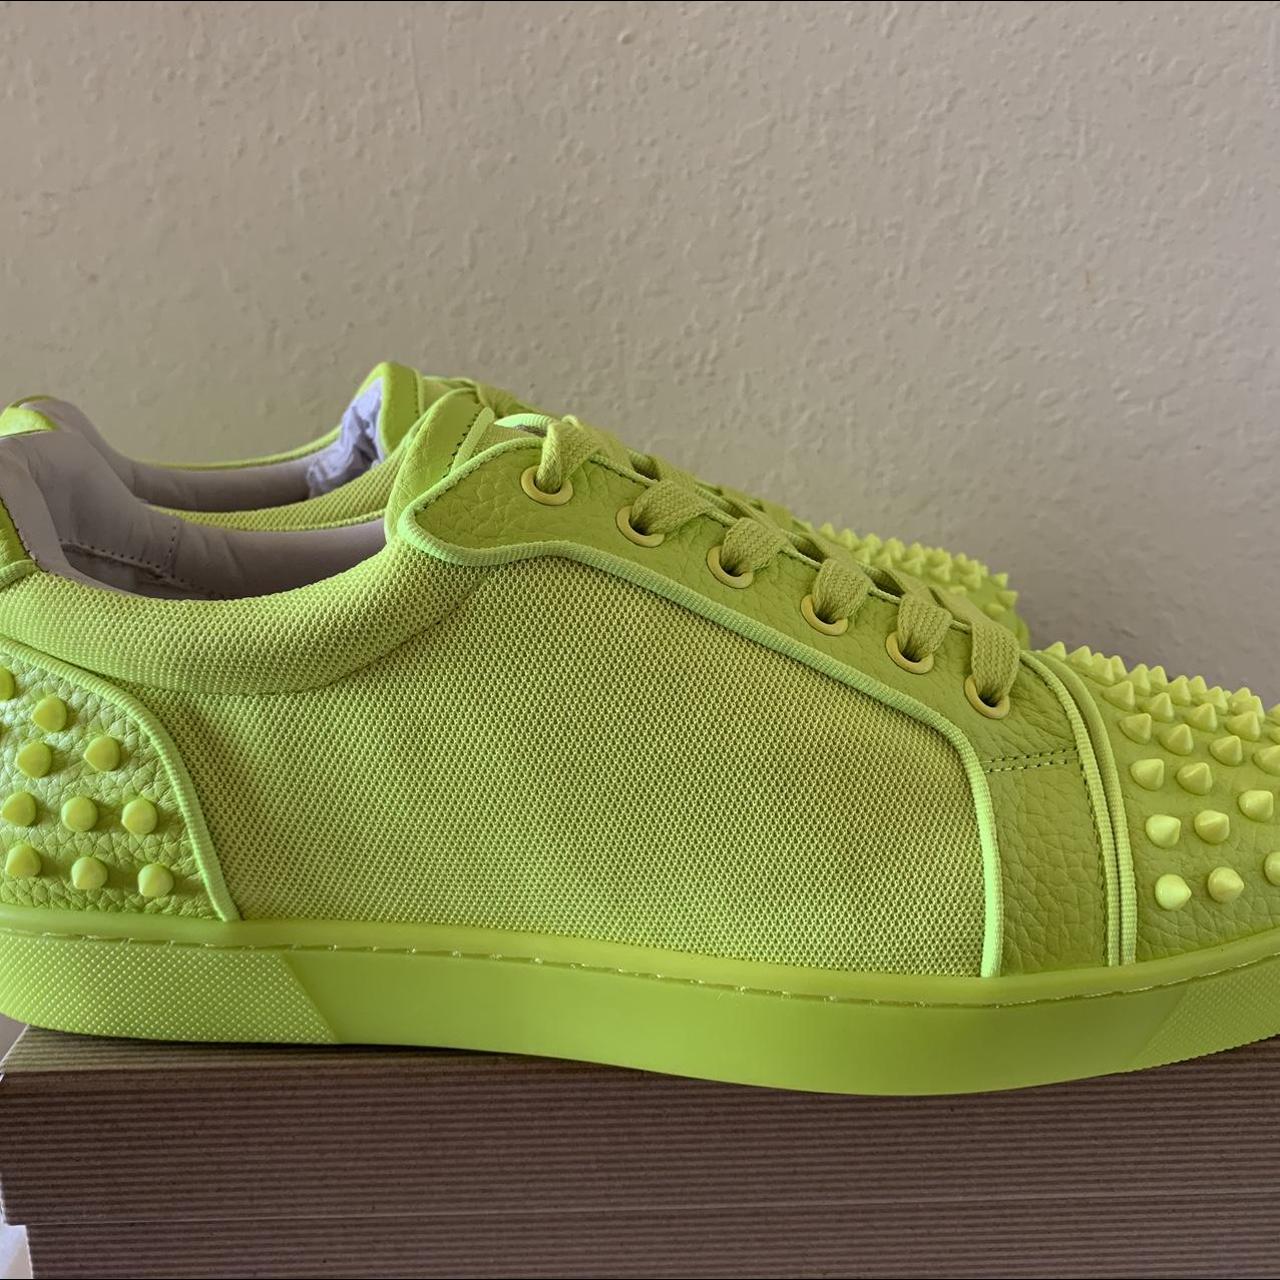 Christian louboutin men shoes size 12 neon green - Depop